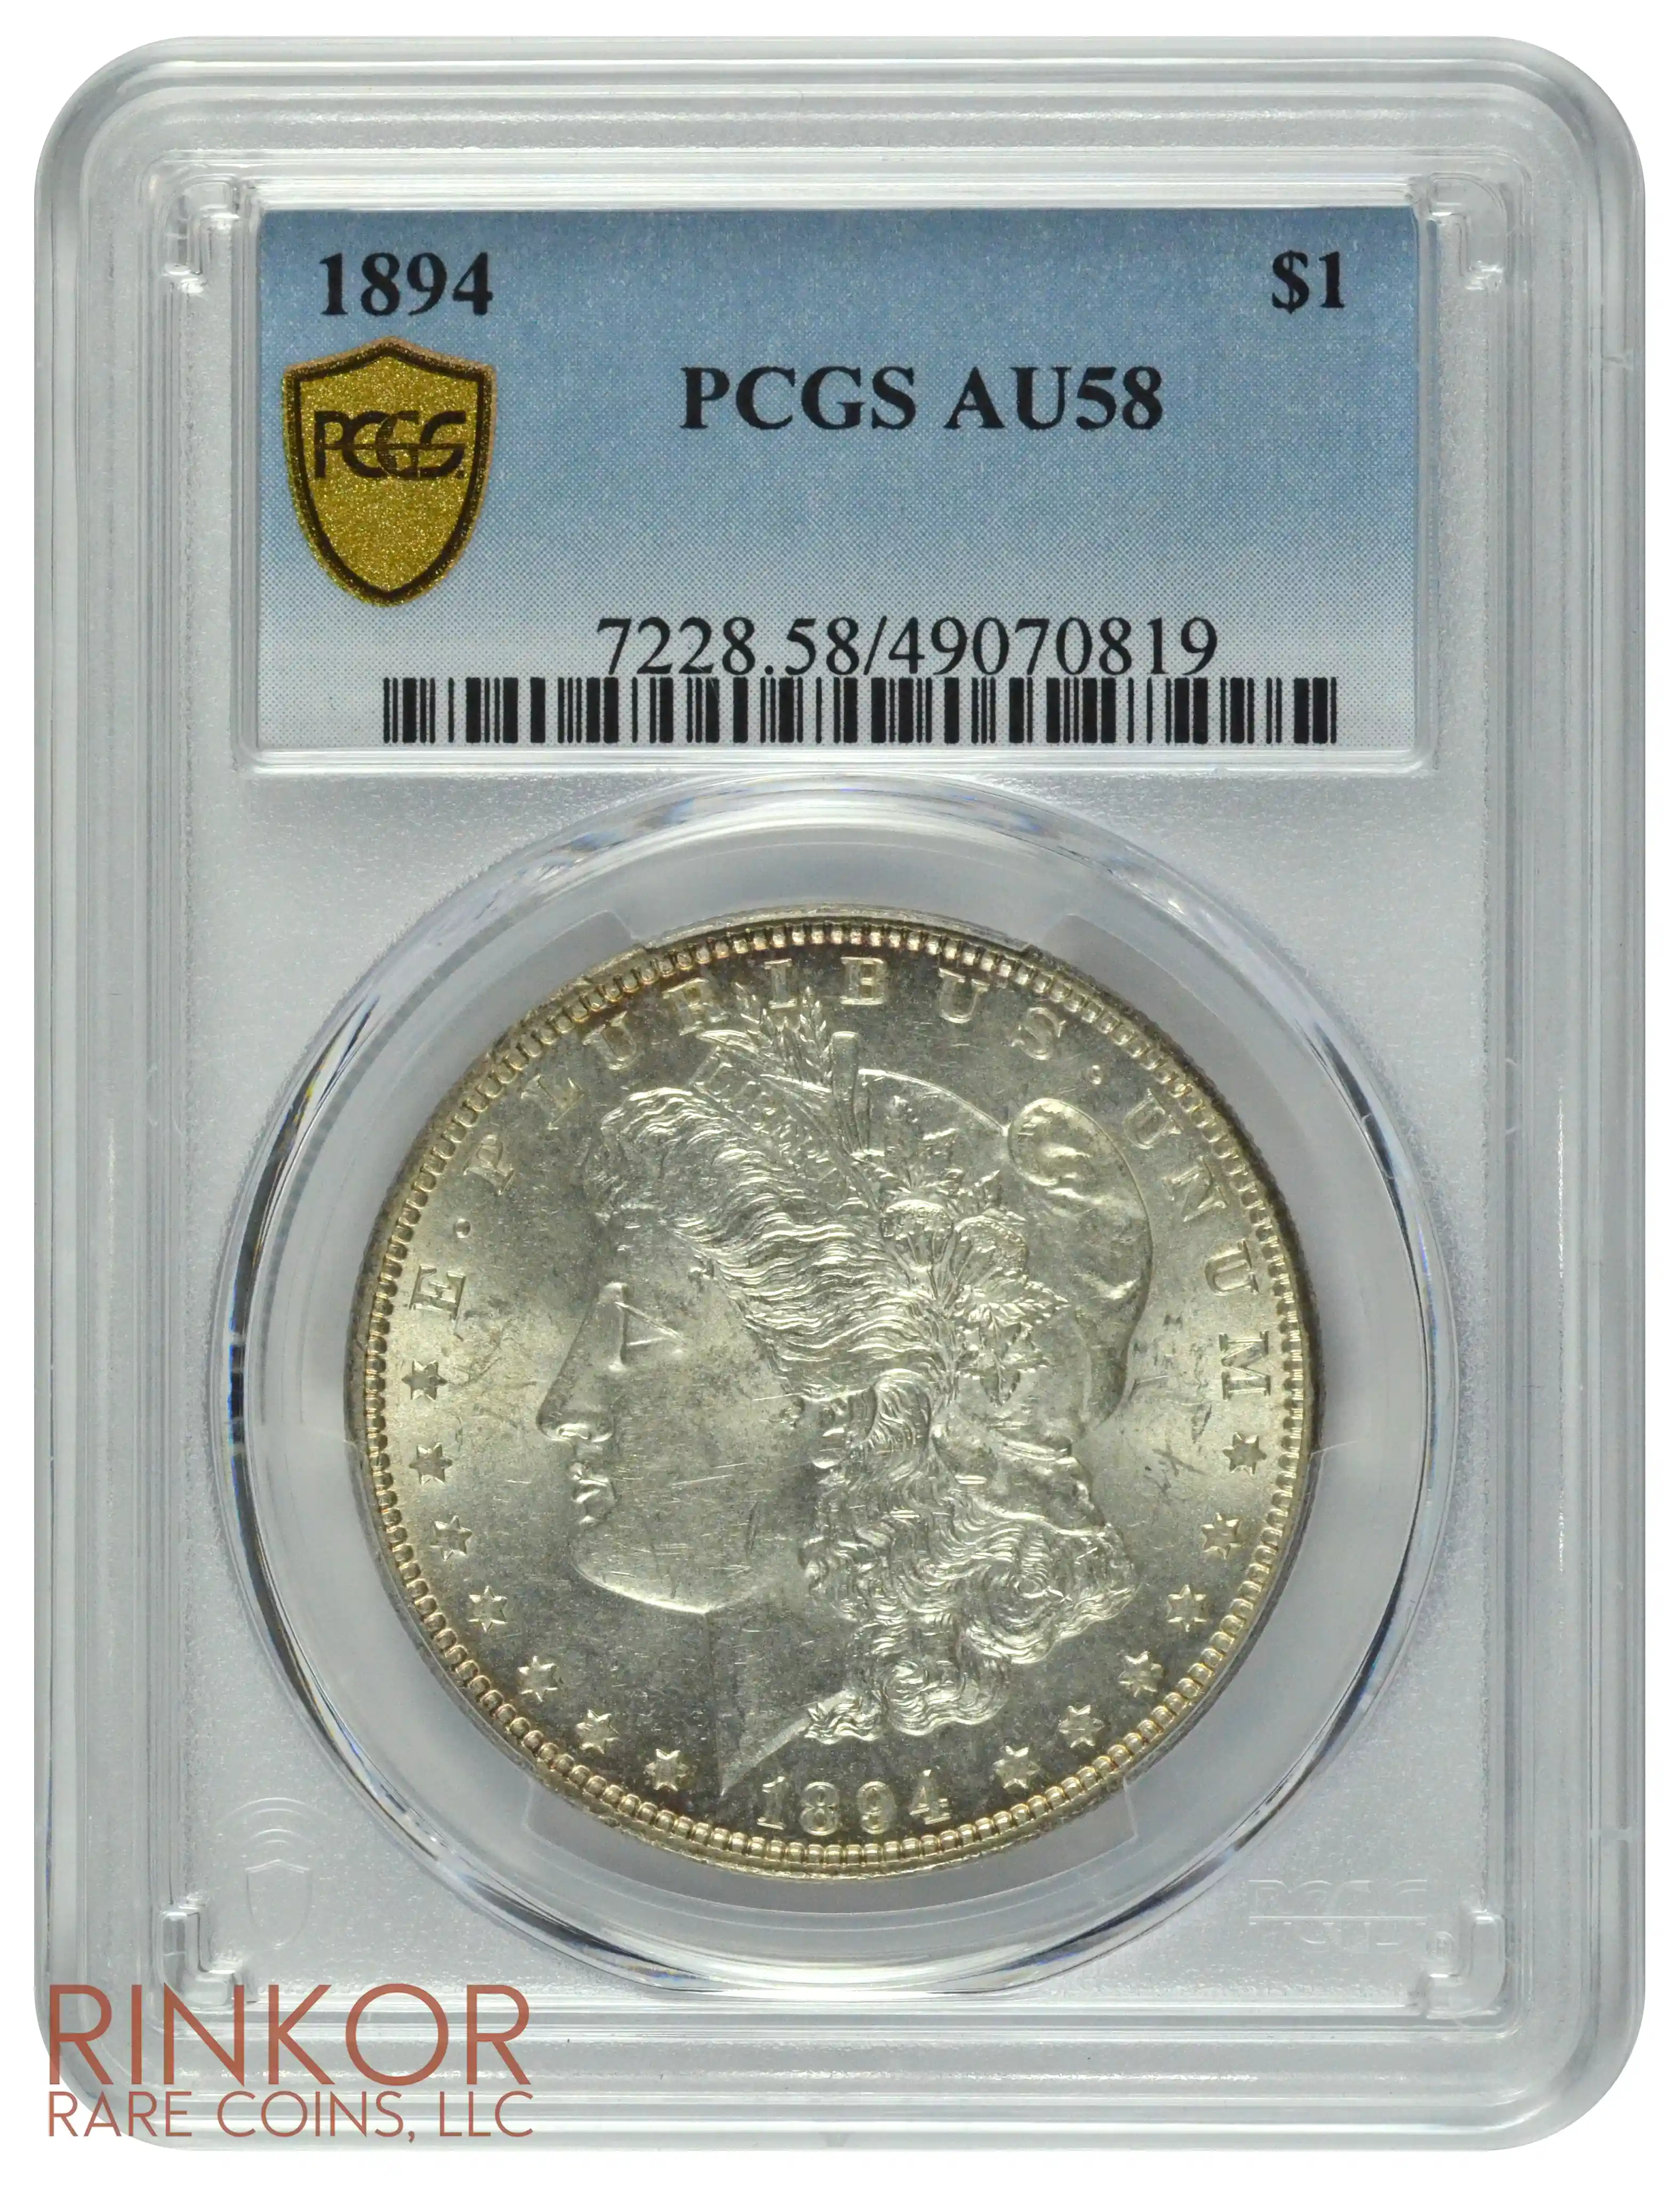 1894 $1 PCGS AU-58